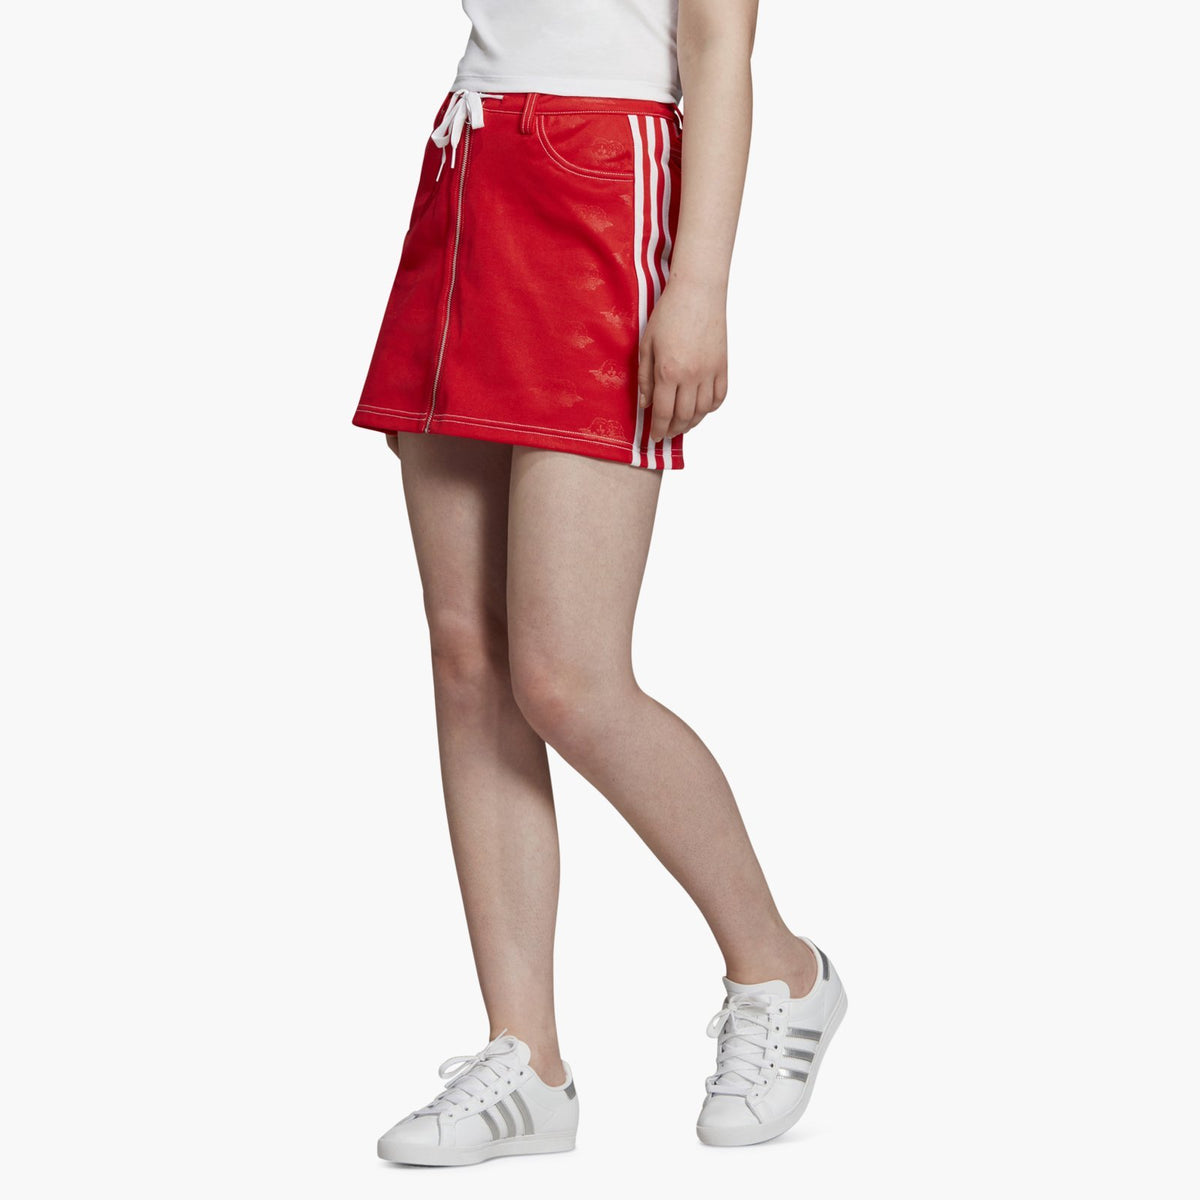 adidas Originals x Fiorucci Skirt 